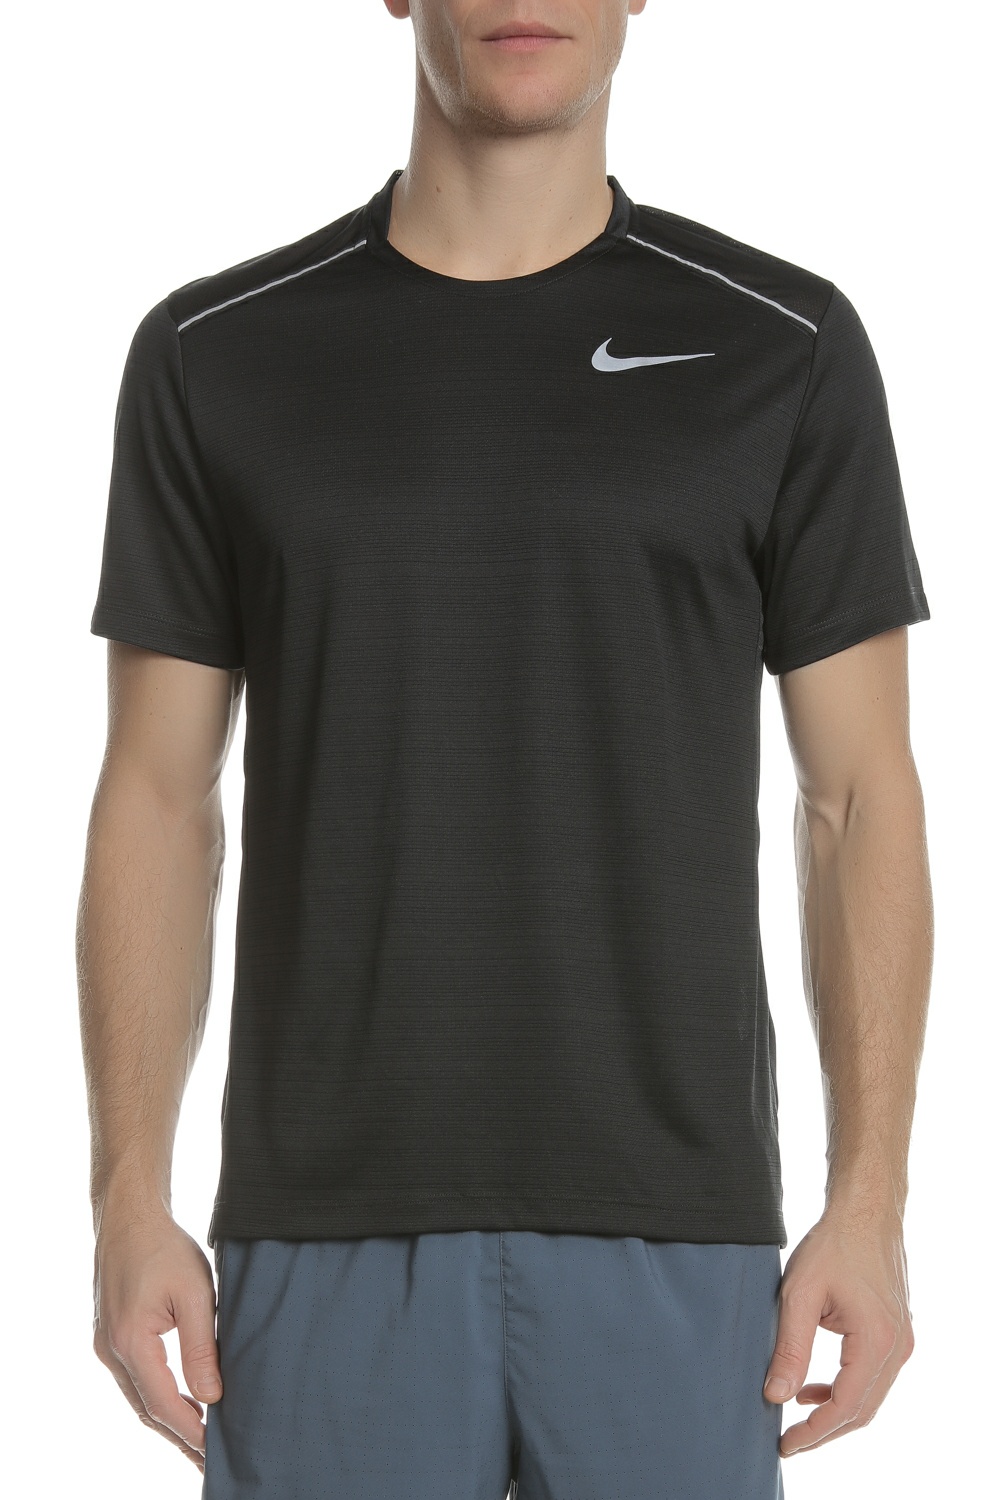 NIKE Ανδρική κοντομάνικη μπλούζα Nike Dri-FIT Miler μαύρη